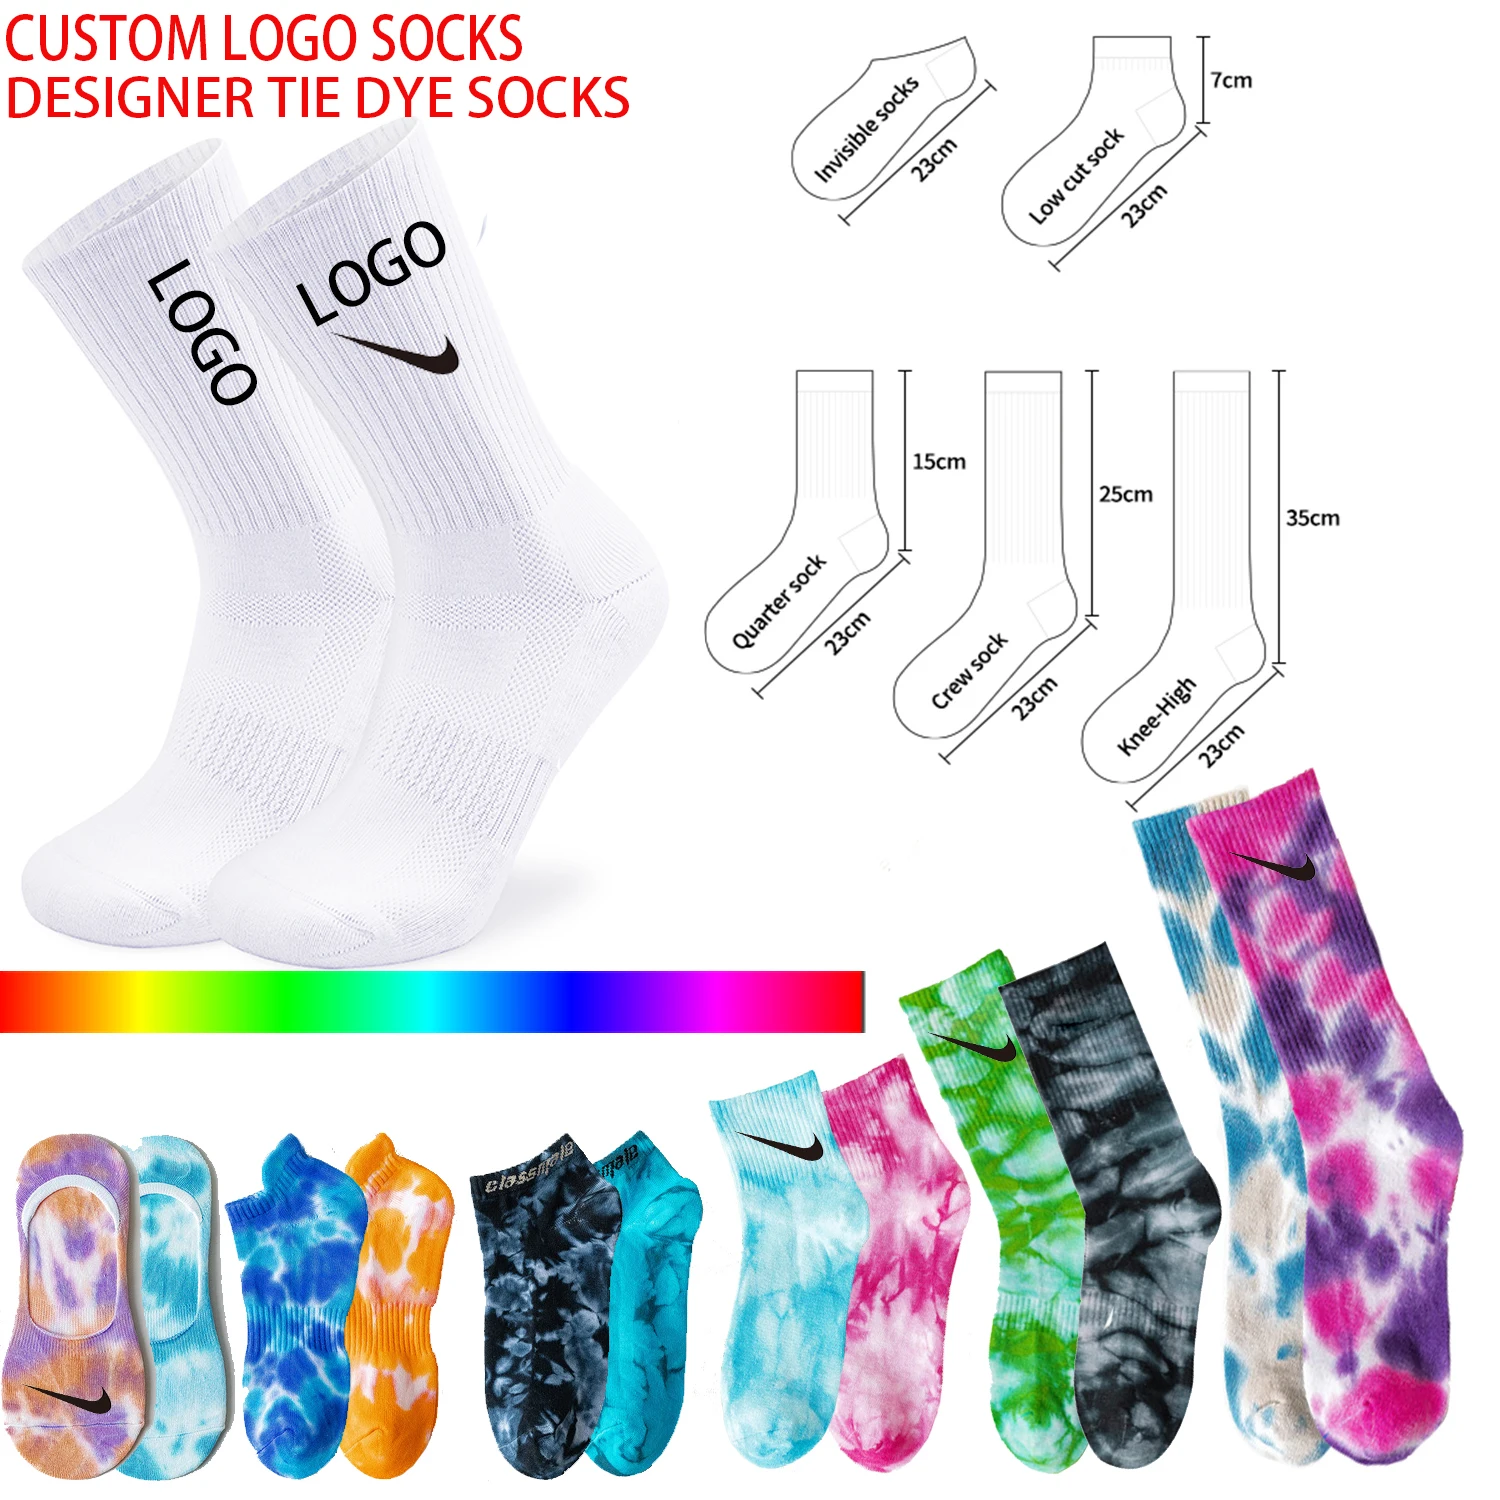 

YUELI custom design logo on socks tie dye happy socks cotton unisex crew sox wholesale funny ins fashion socks, Multicolor